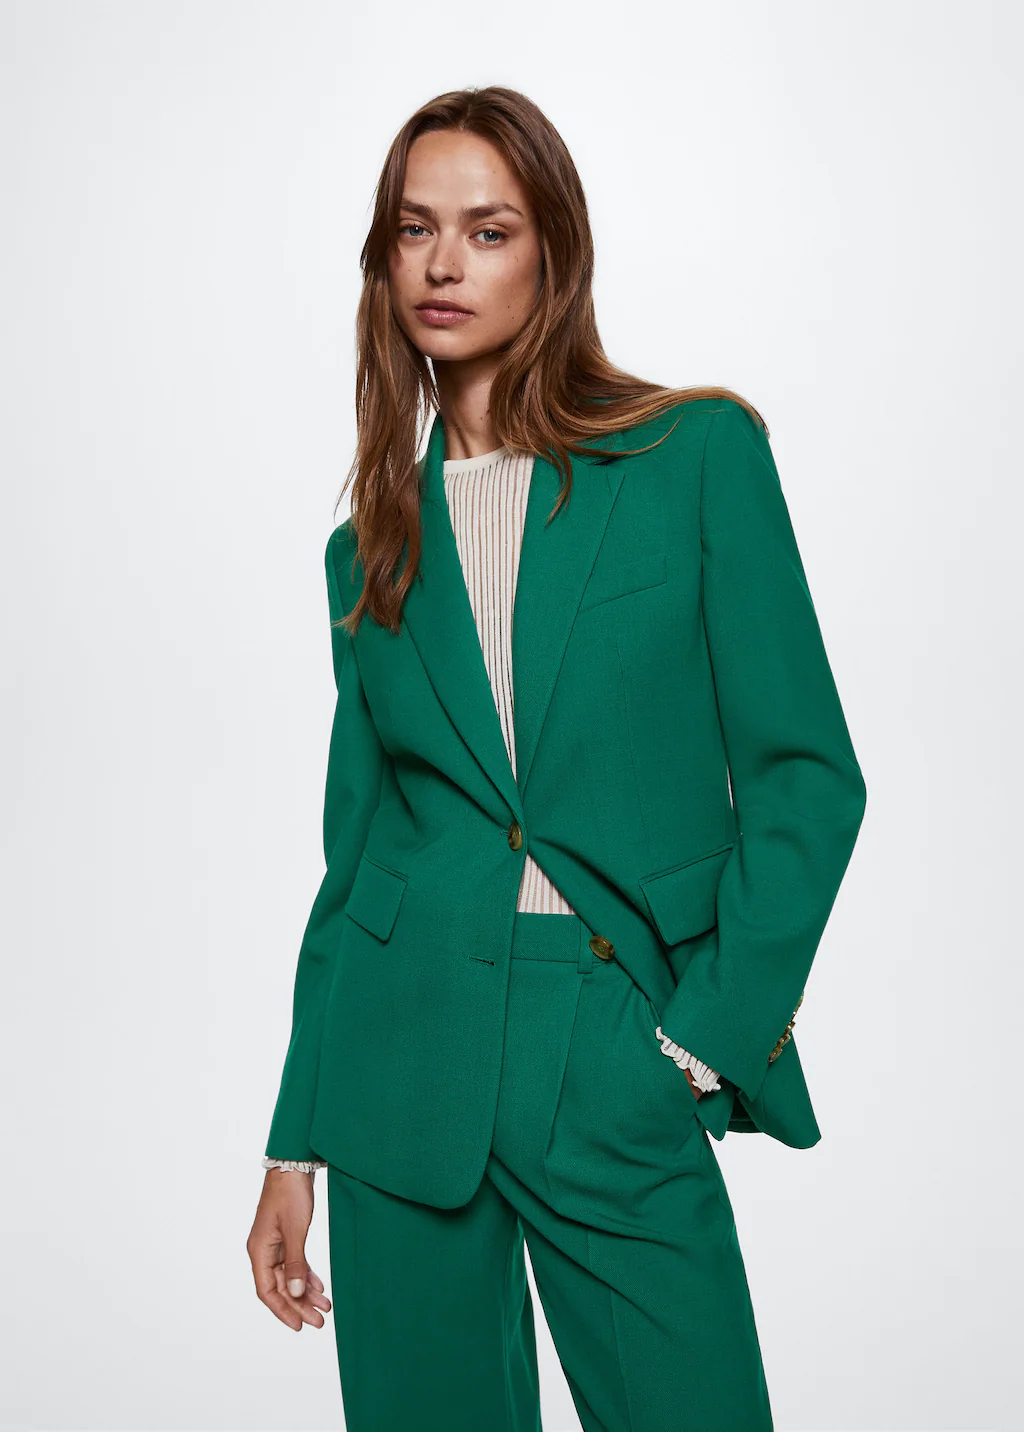 Americana traje lana verde (99,99 euros).